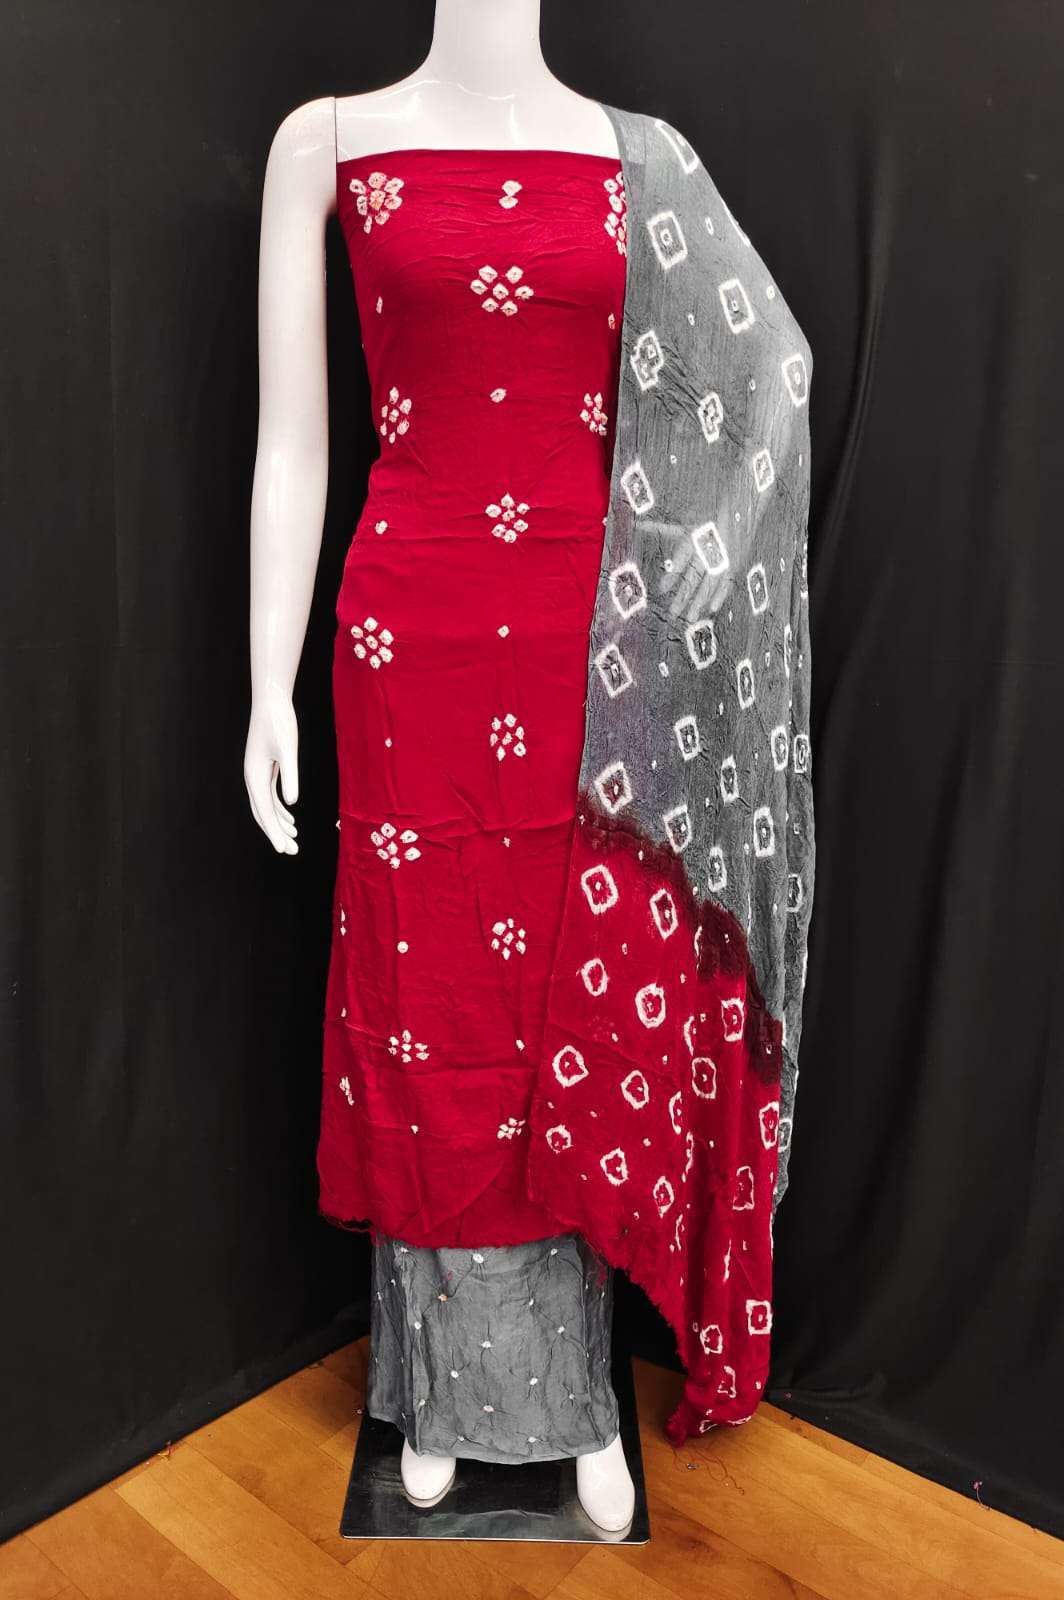 Top Bandhani Dress Material Manufacturers in Jamnagar - बांधनी ड्रेस  मटेरियल मनुफक्चरर्स, जामनगर - Justdial